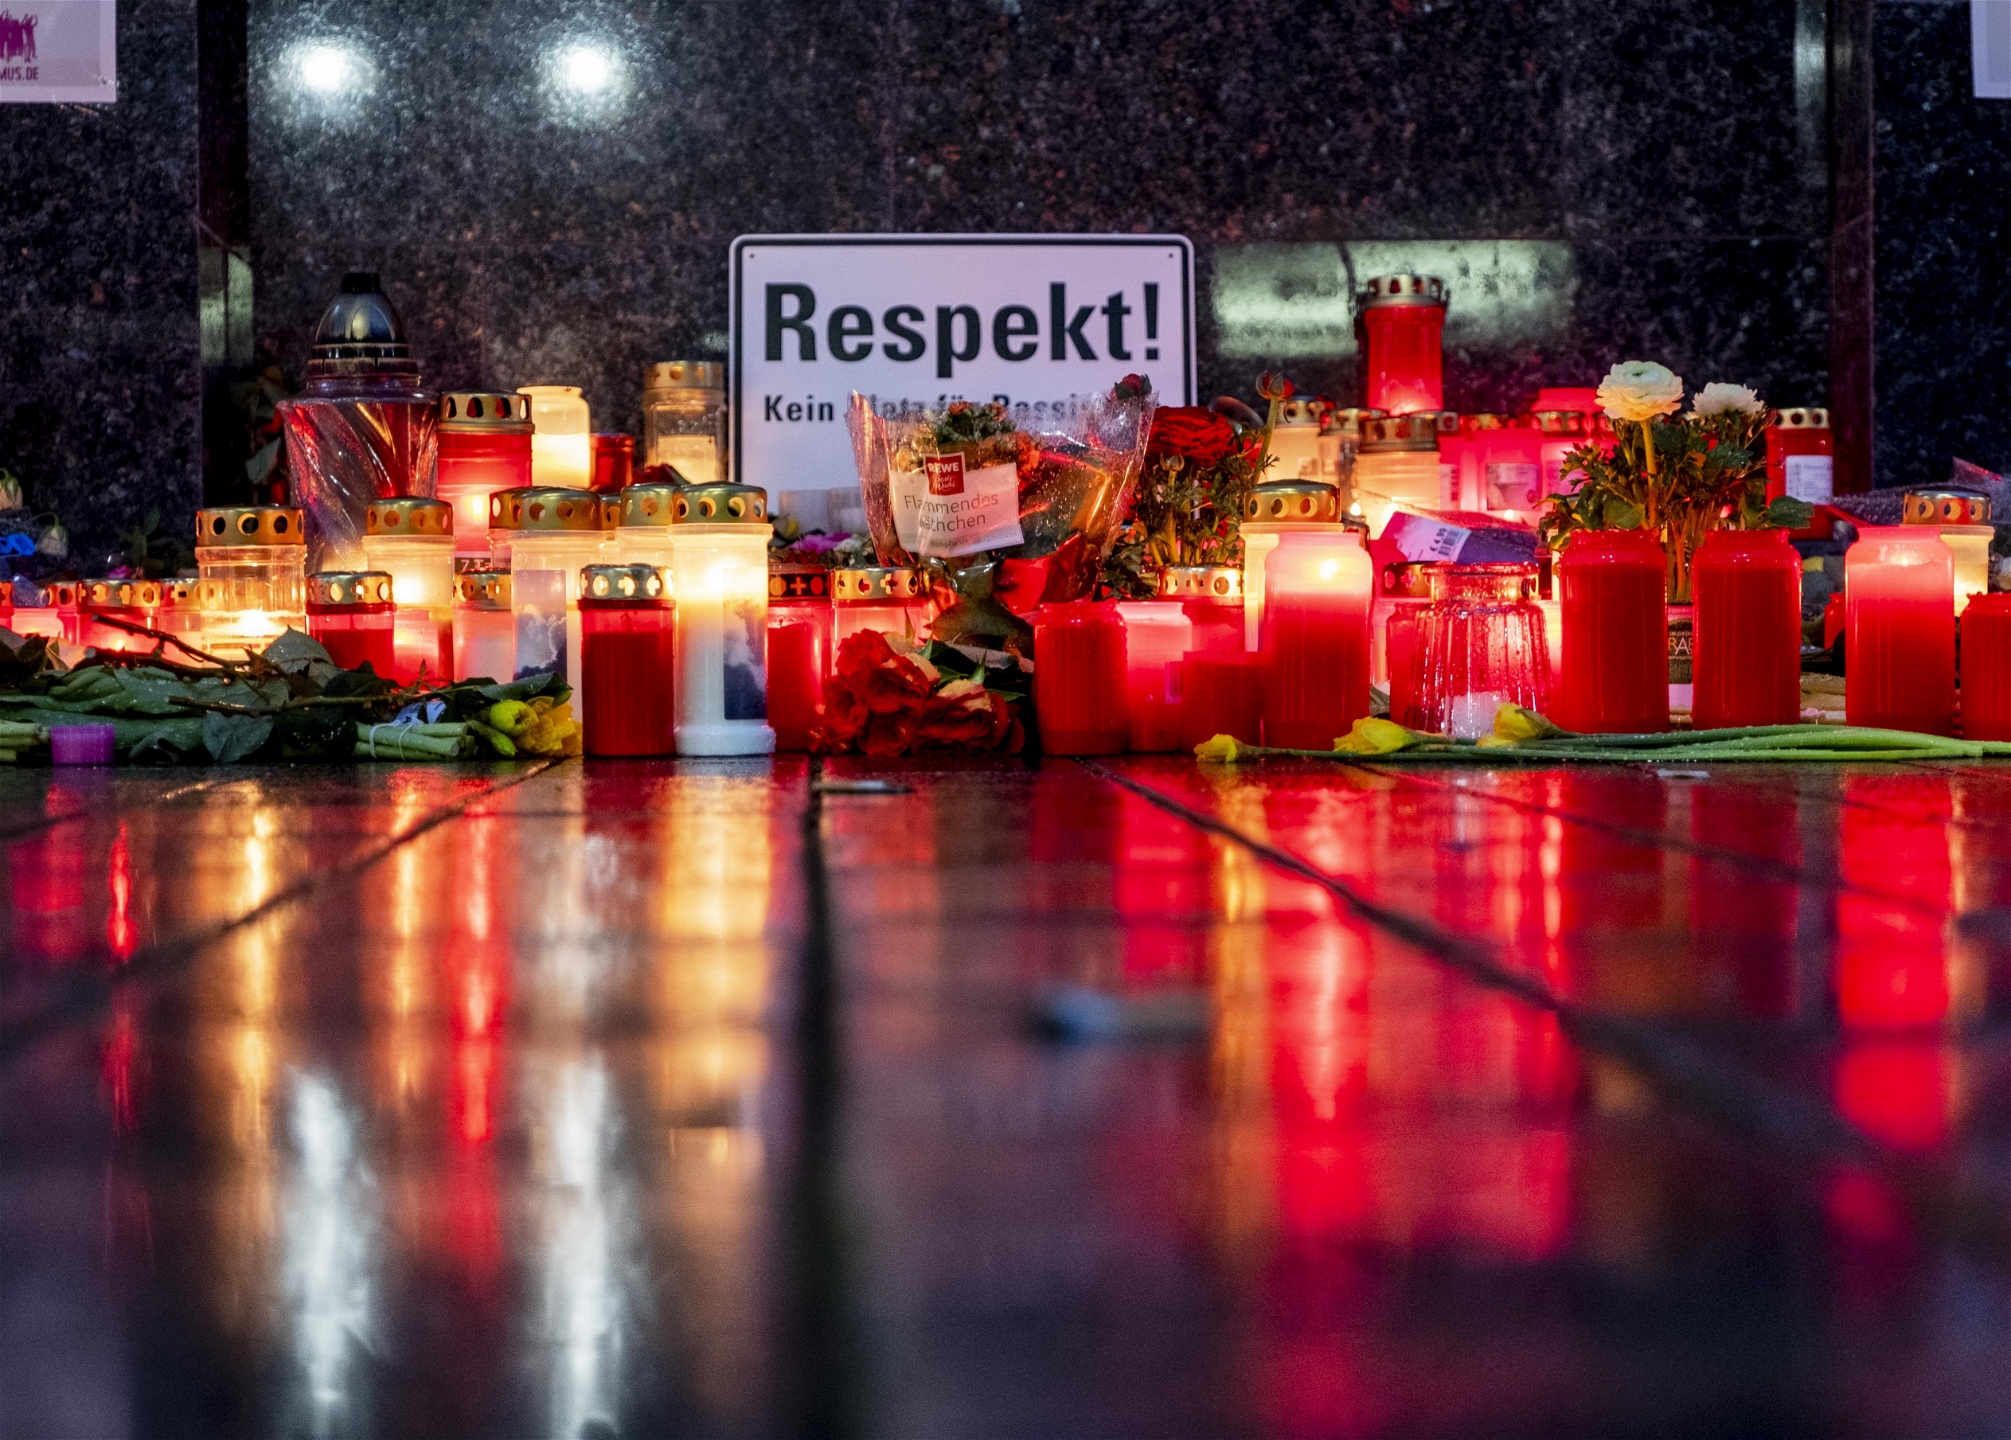 Bland ljusen efter skjut­ningarna i Hanau: ”Respect no space for rasism”.